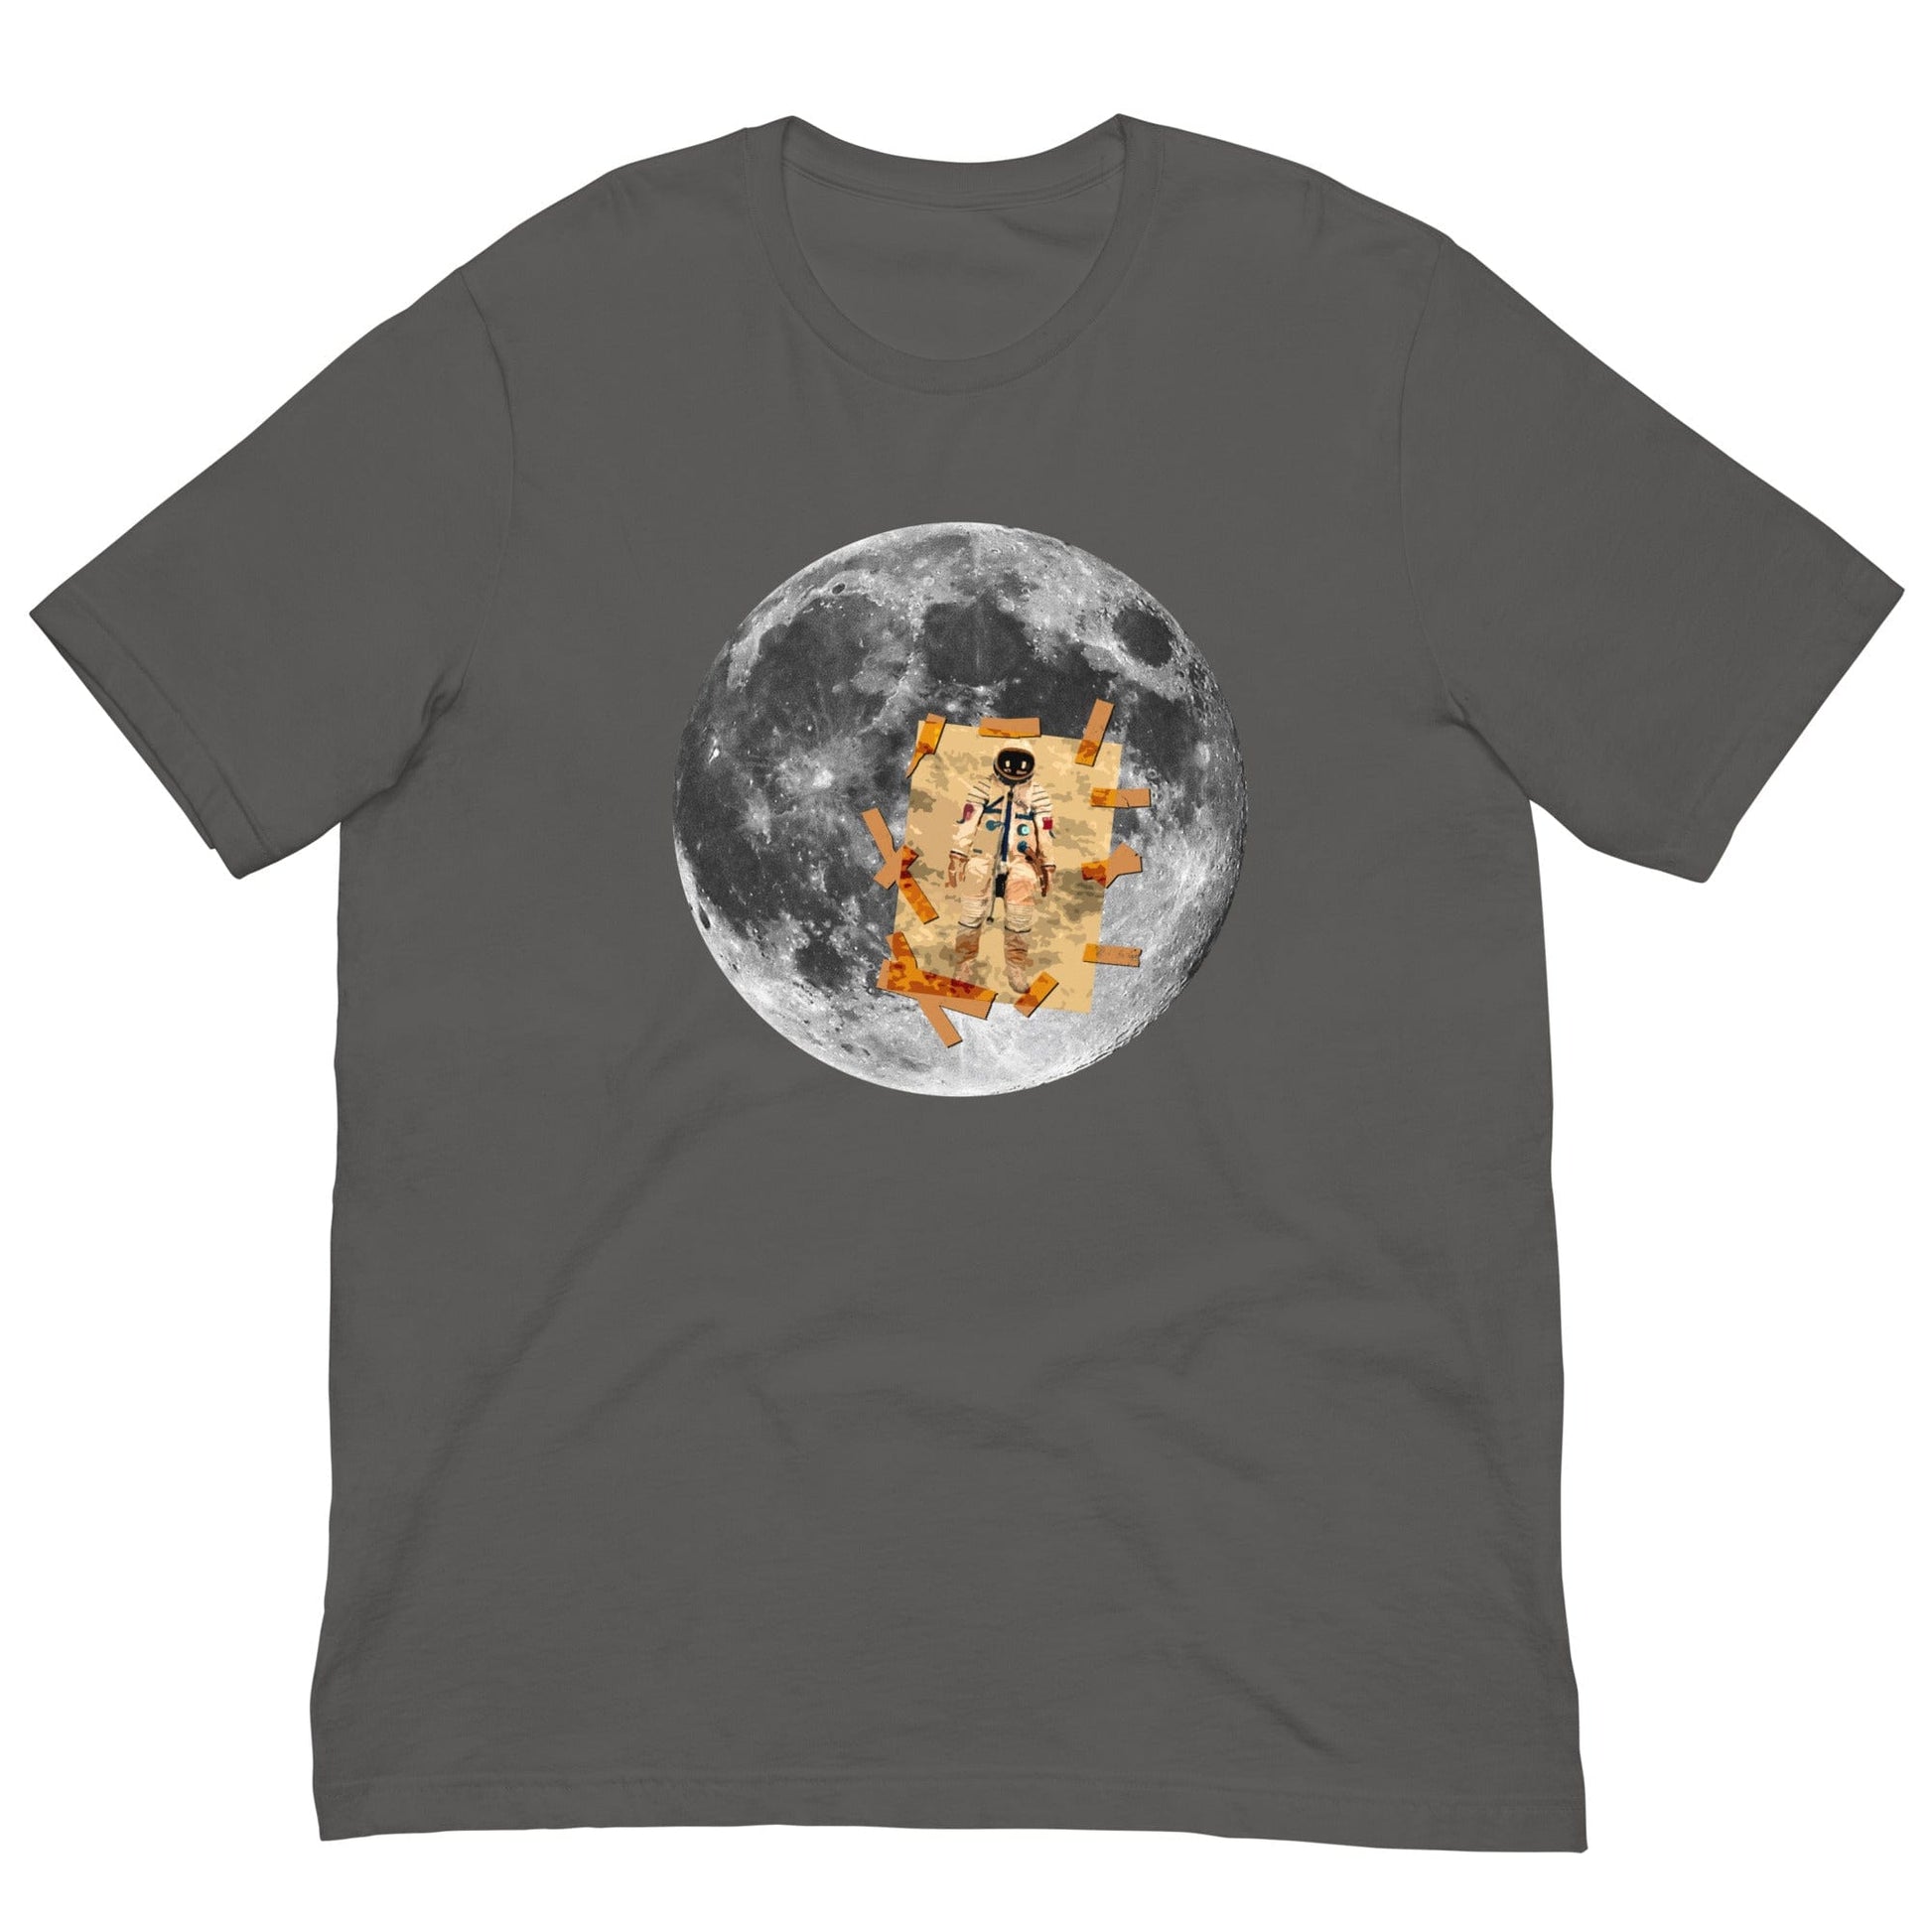 Man on the Moon T-shirt Asphalt / S